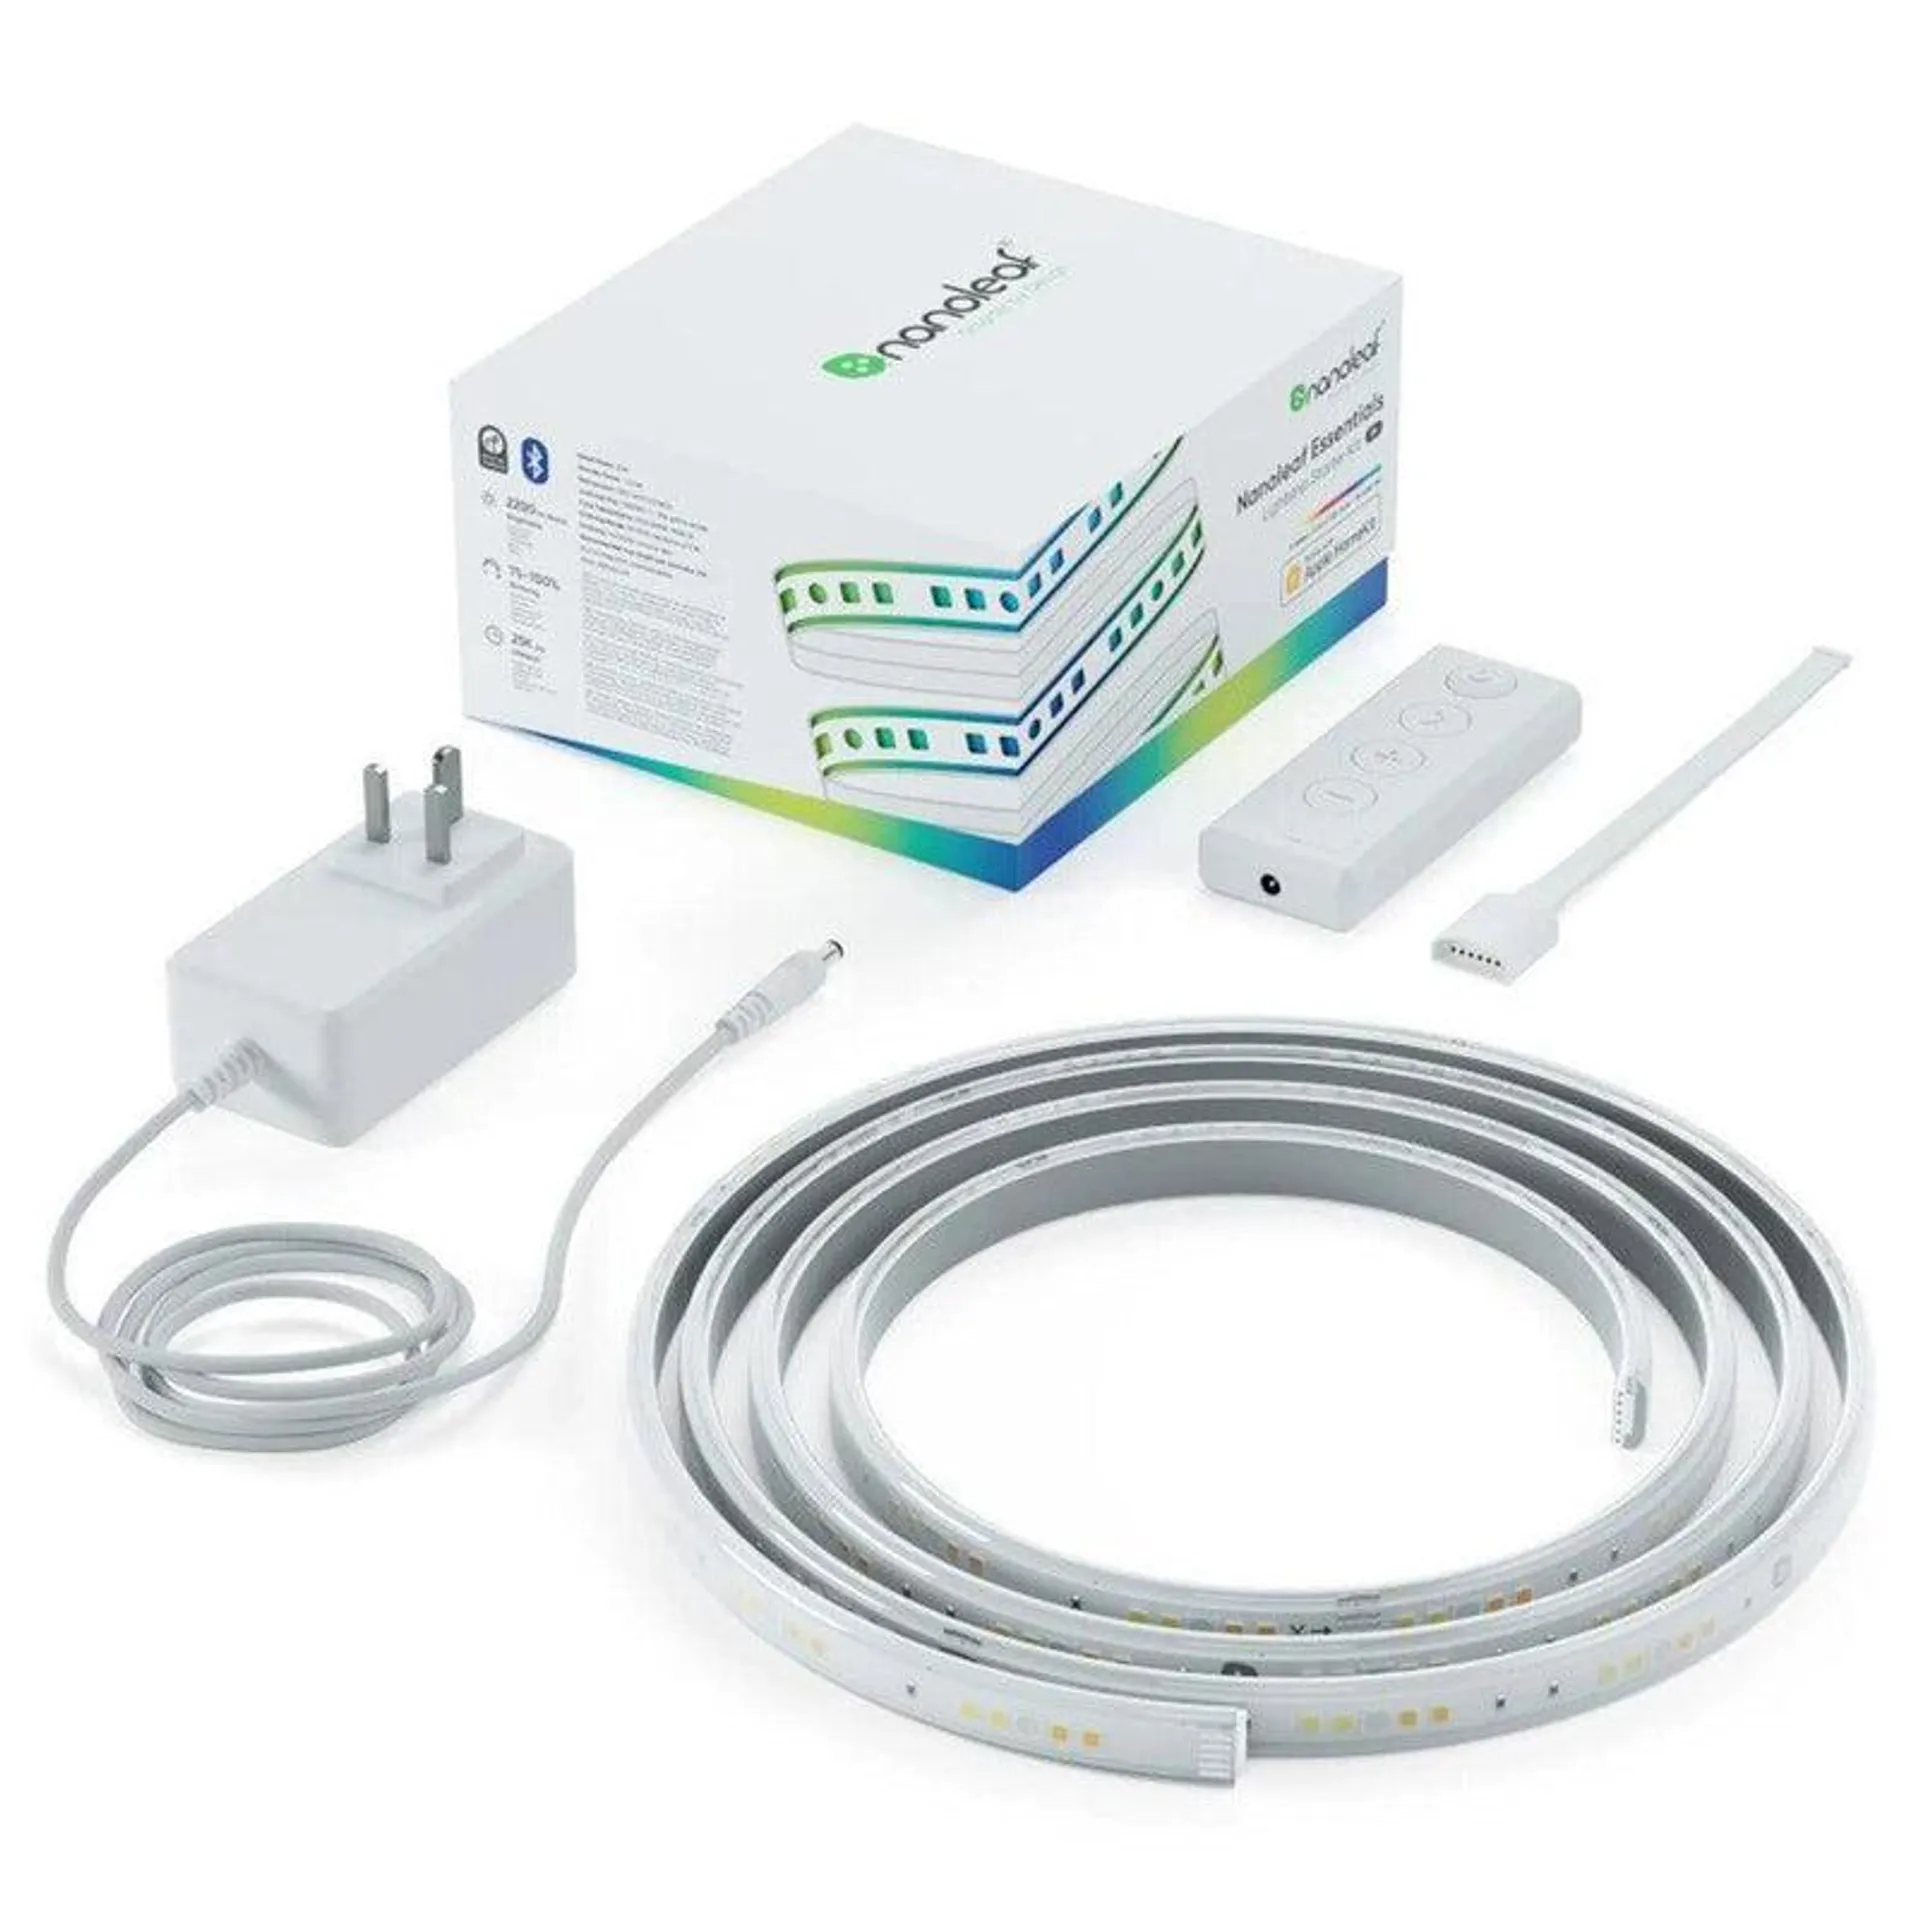 Nanoleaf 2M Essentials LightStrips Starter Kit - White | NL550002LS2M